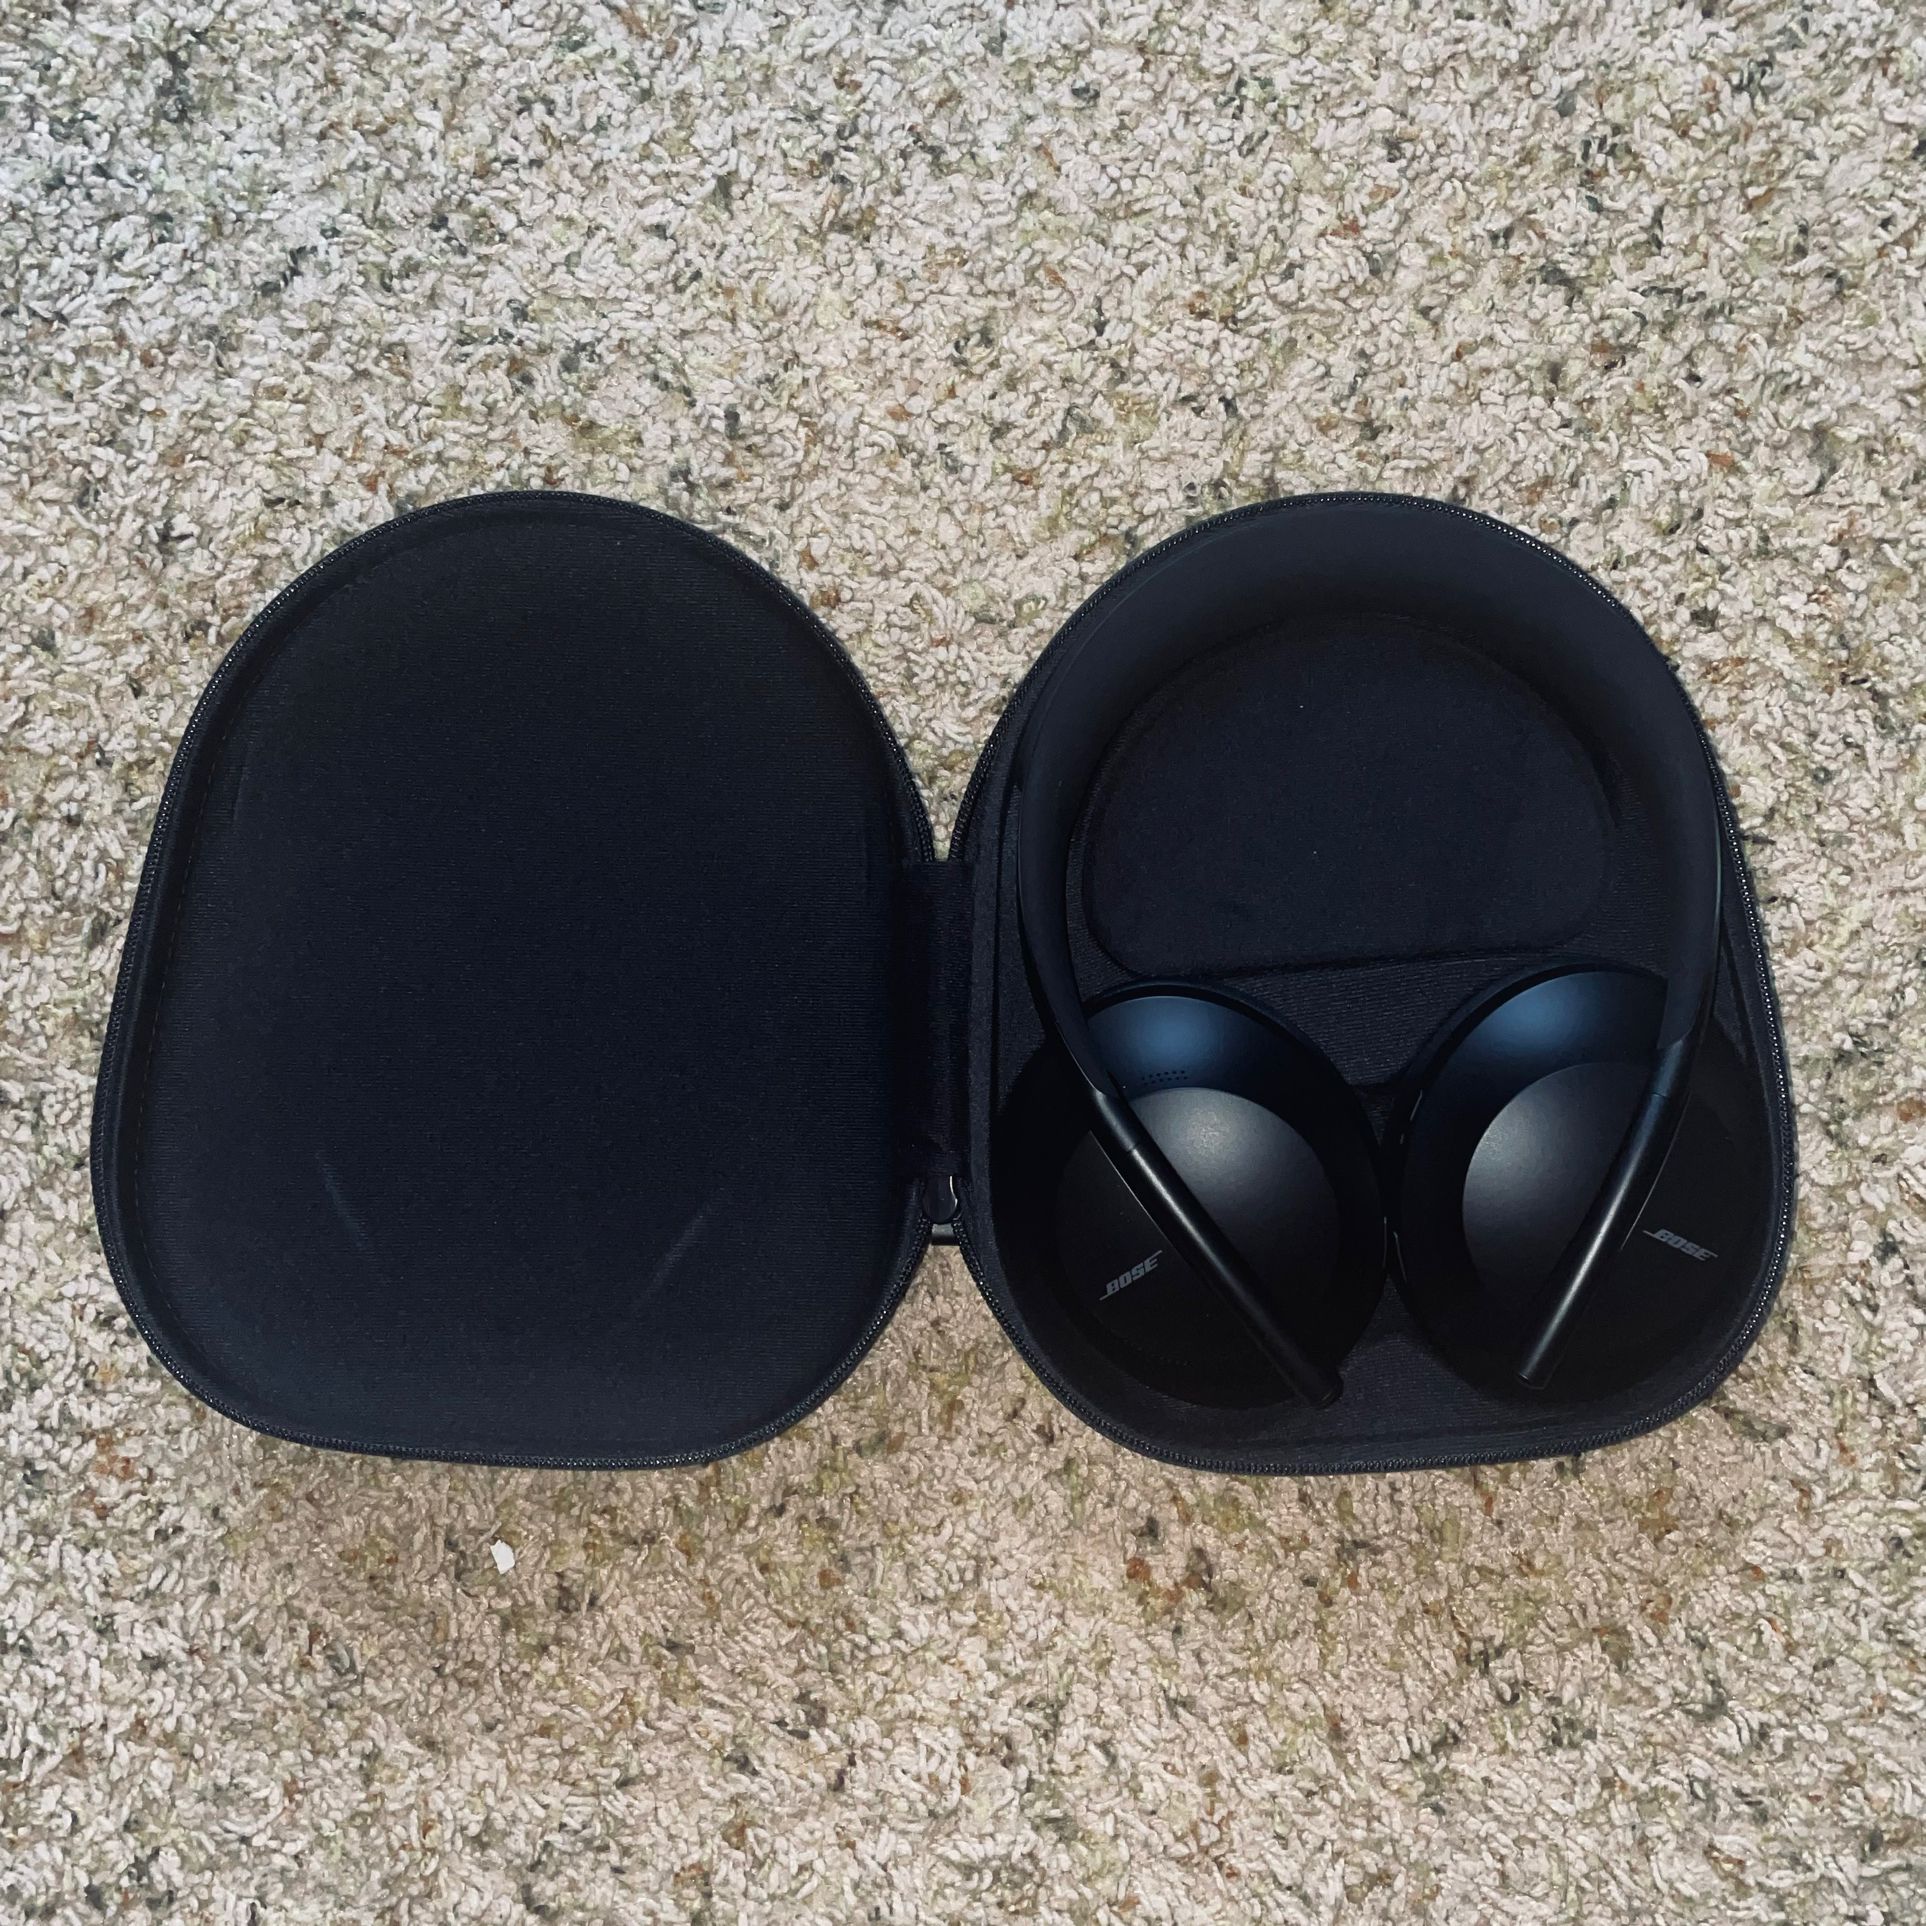 Bose Noise canceling Headphones 700 New